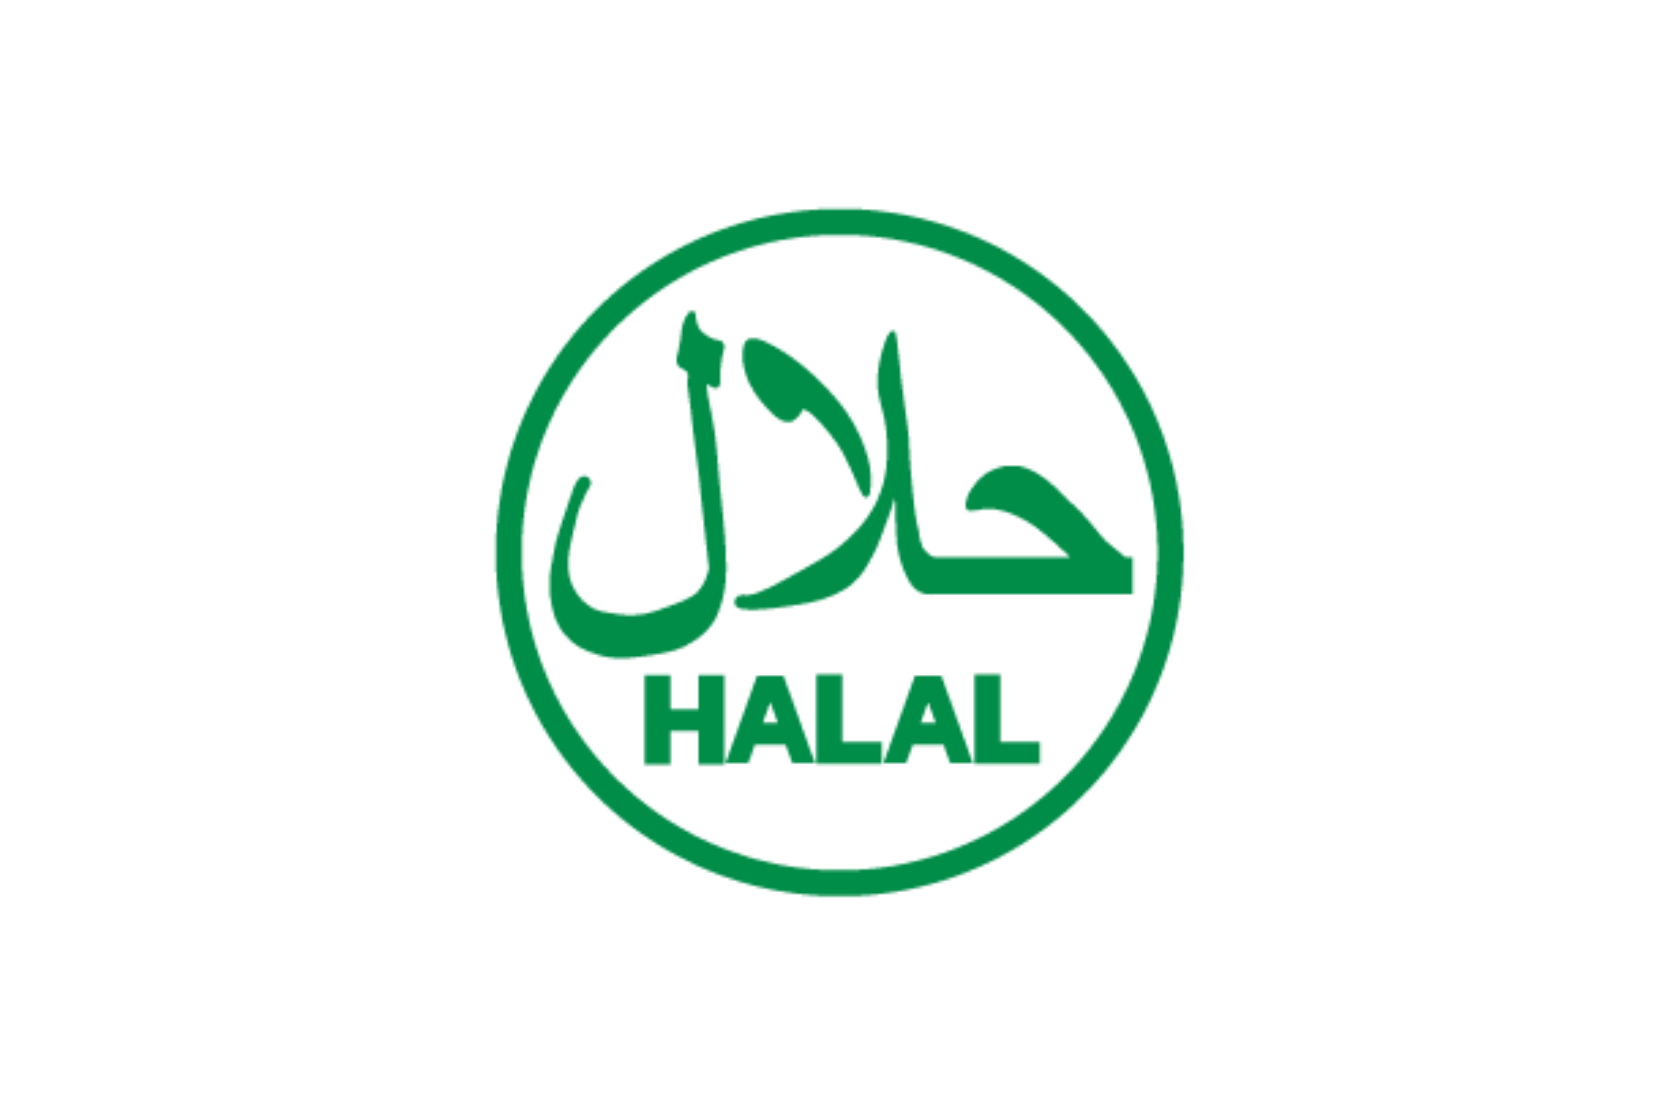 Татарский халяль. Эмблема Халяль. Символ Халяль. Халяль надпись. Halal логотип.